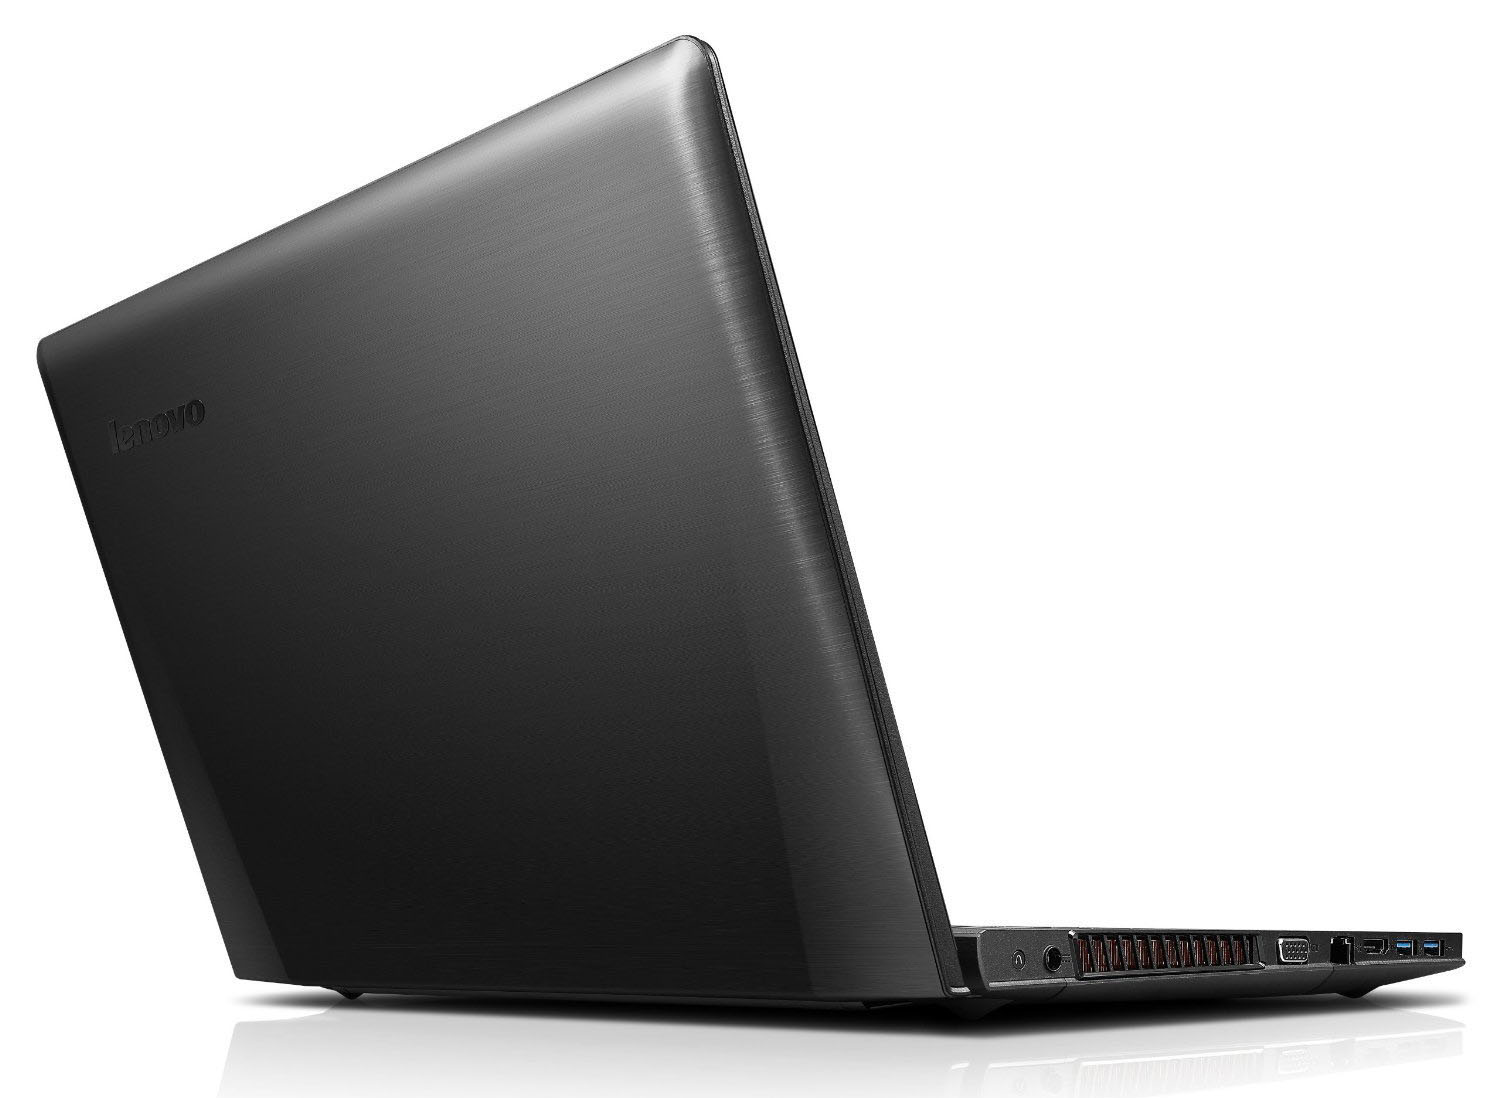 Lenovo IdeaPad Y510p - i5-4200M · NVIDIA GeForce GT 750M (2GB